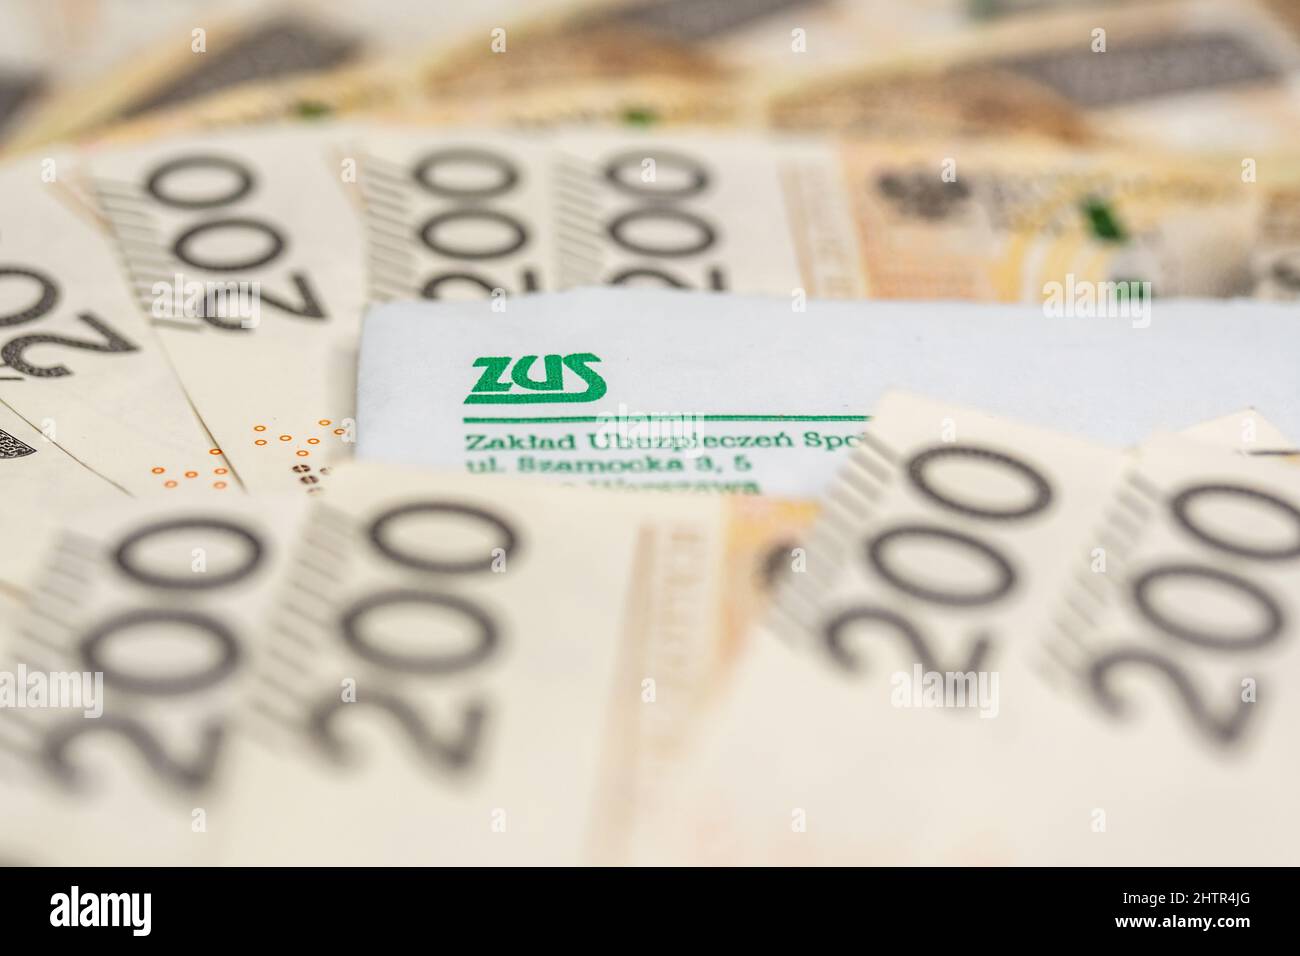 Illustrative editorial photograph of Zakład Ubezpieczeń Społecznych ZUS - Polish National Insurance and Pension Government Office concept. Stock Photo